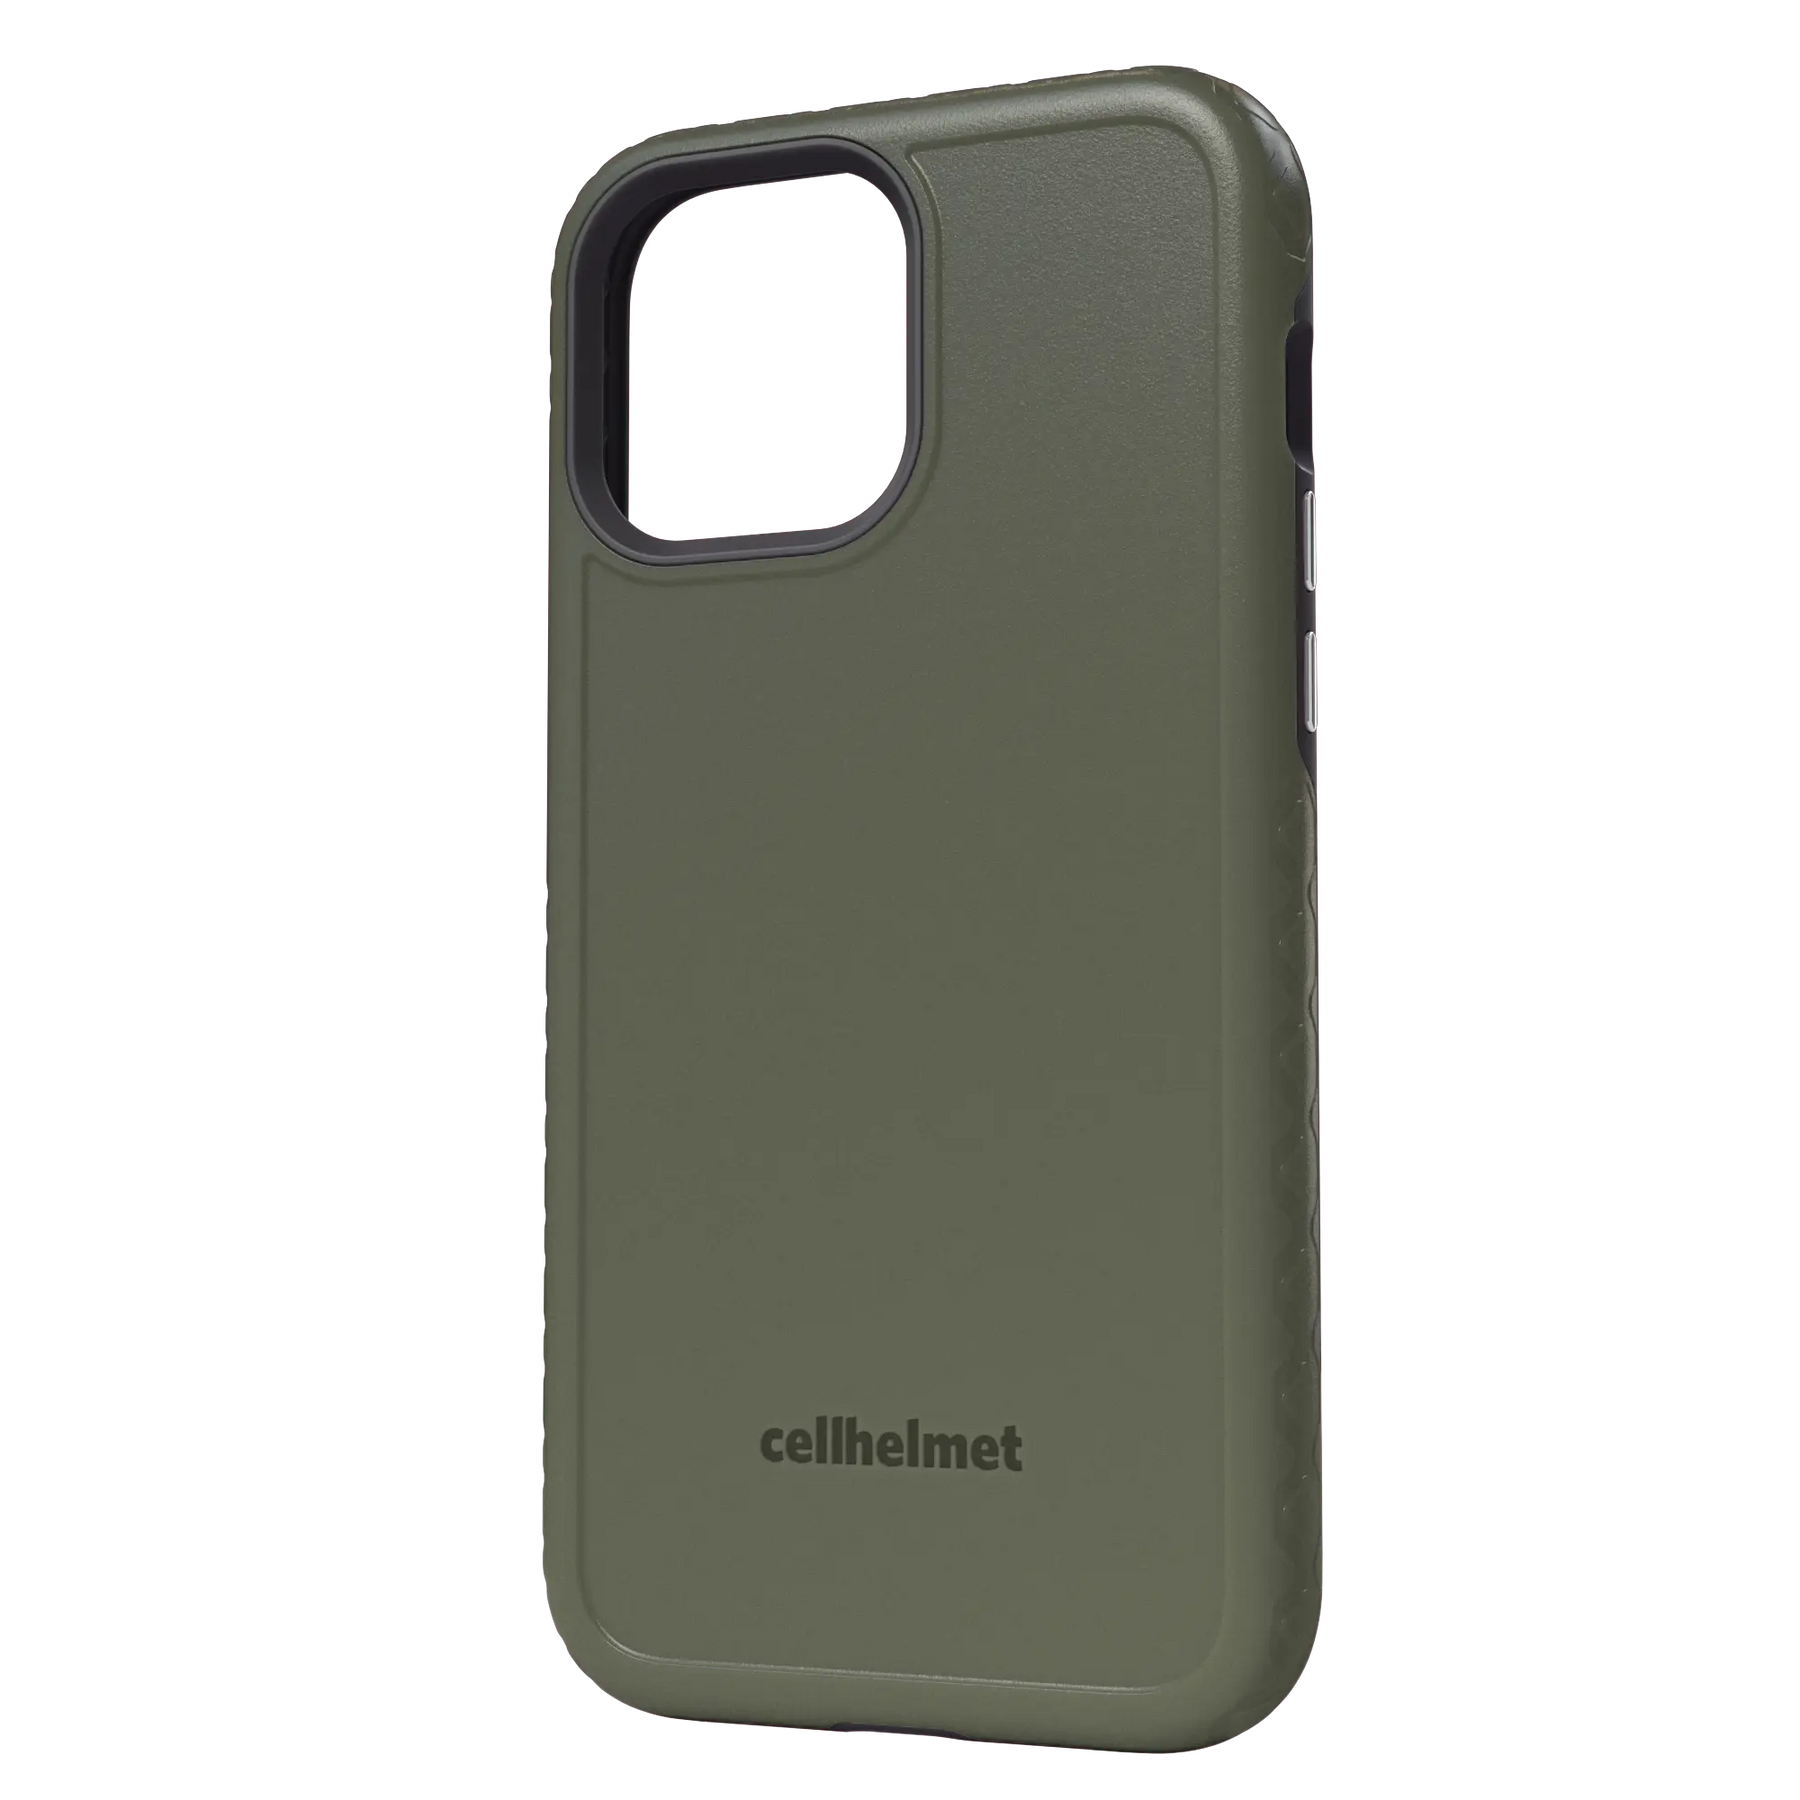 Green cellhelmet Customizable Case for iPhone 13 Pro Max